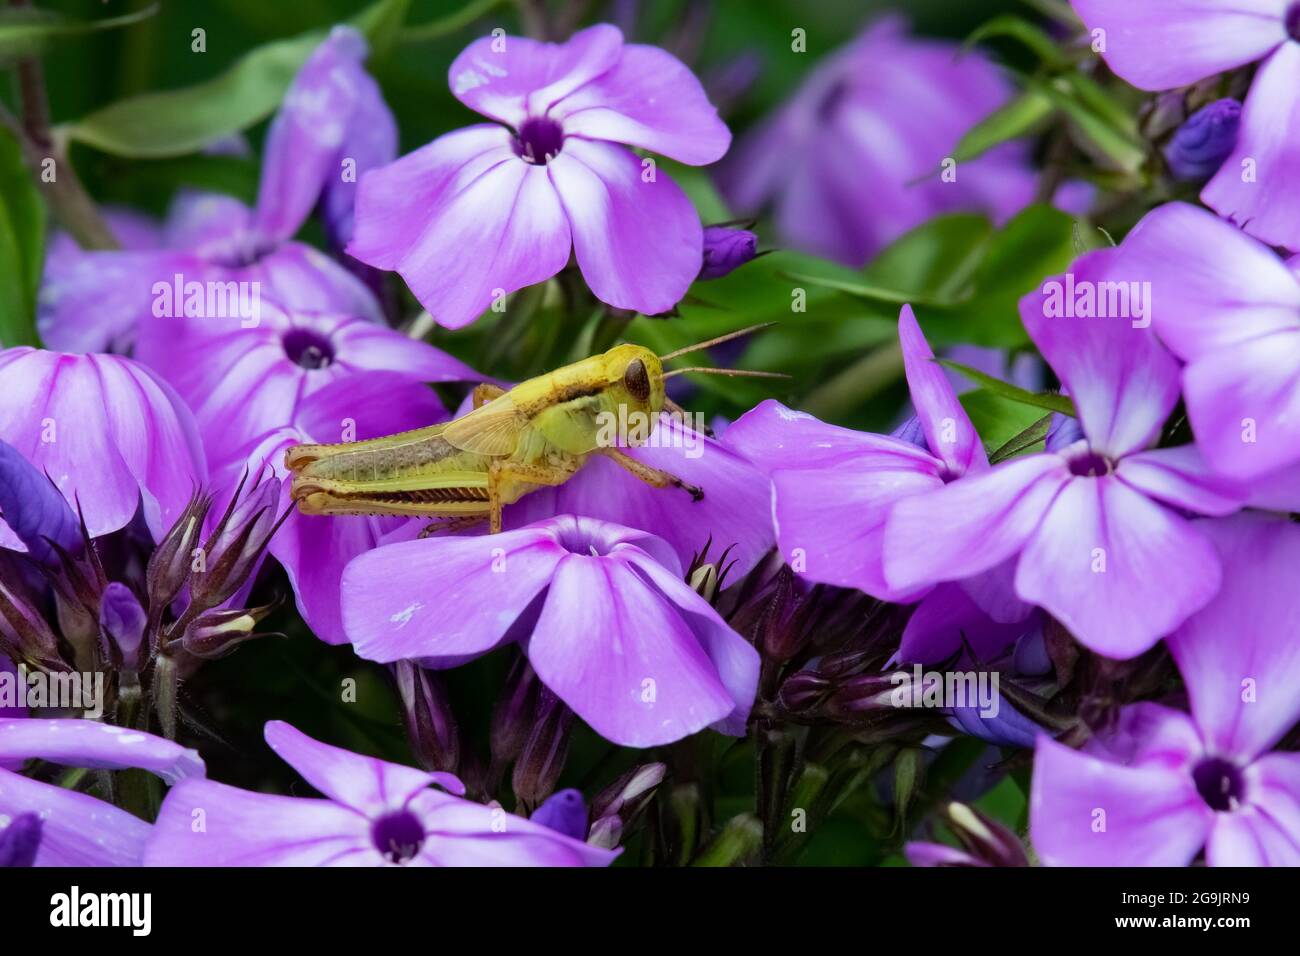 A grasshopper, Caelifera, sitting on a blue or purple phlox flower in a garden Stock Photo